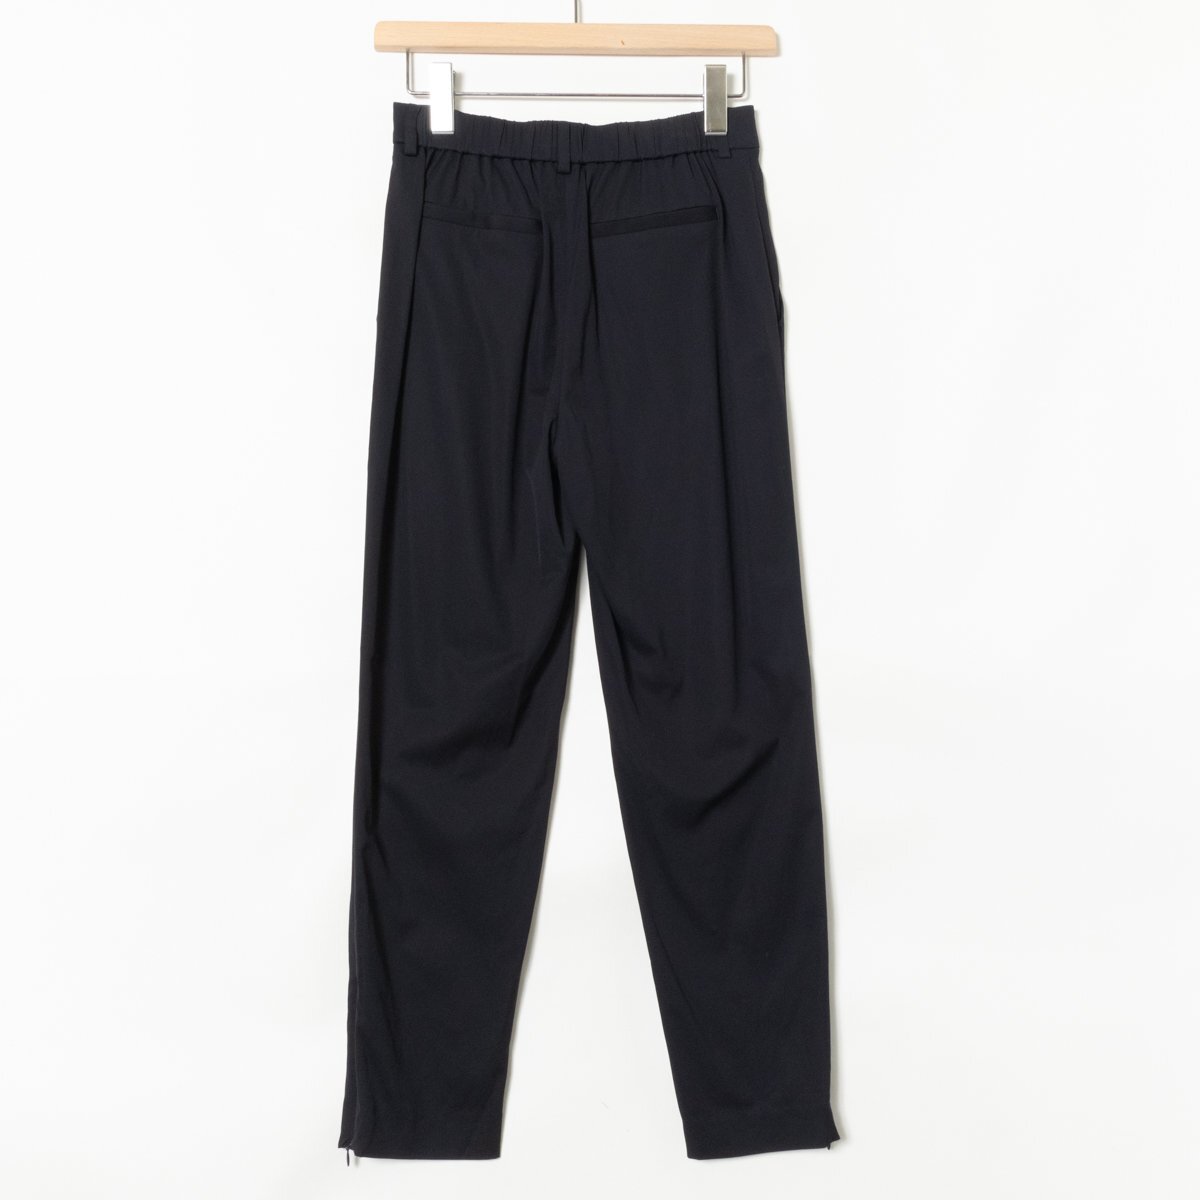 UNTITLED Untitled tapered pants slacks pants plain bottoms hem fastener 1 cupra dark navy navy blue beautiful . casual 